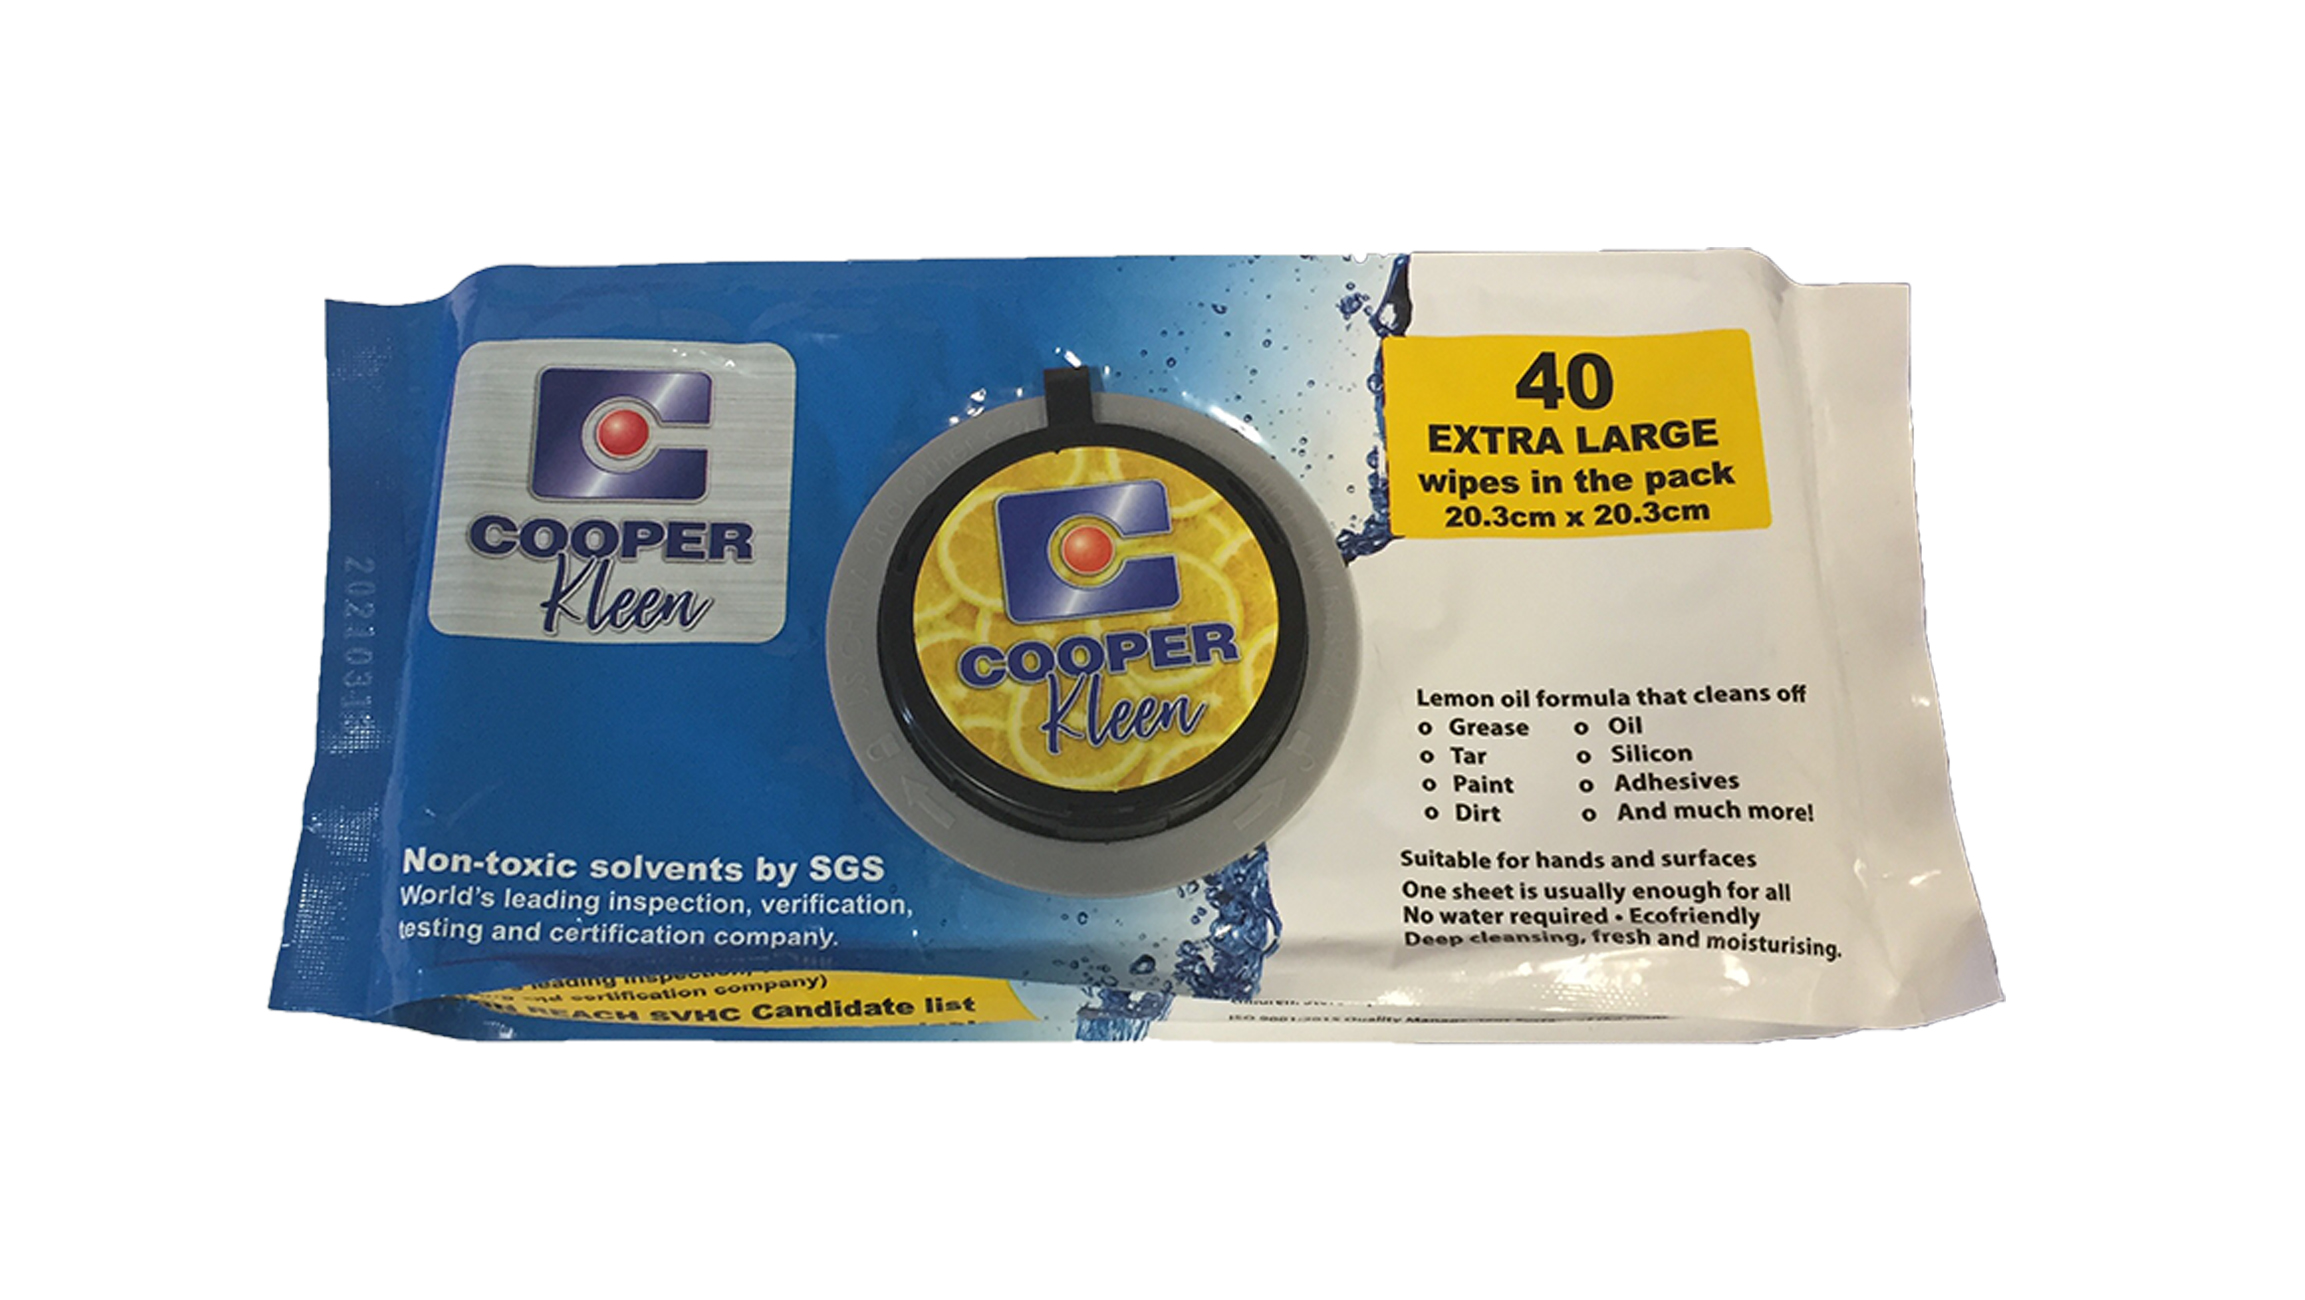 Wet Wipes - Non Toxic (Lemon Oil Formula) 40 Pack